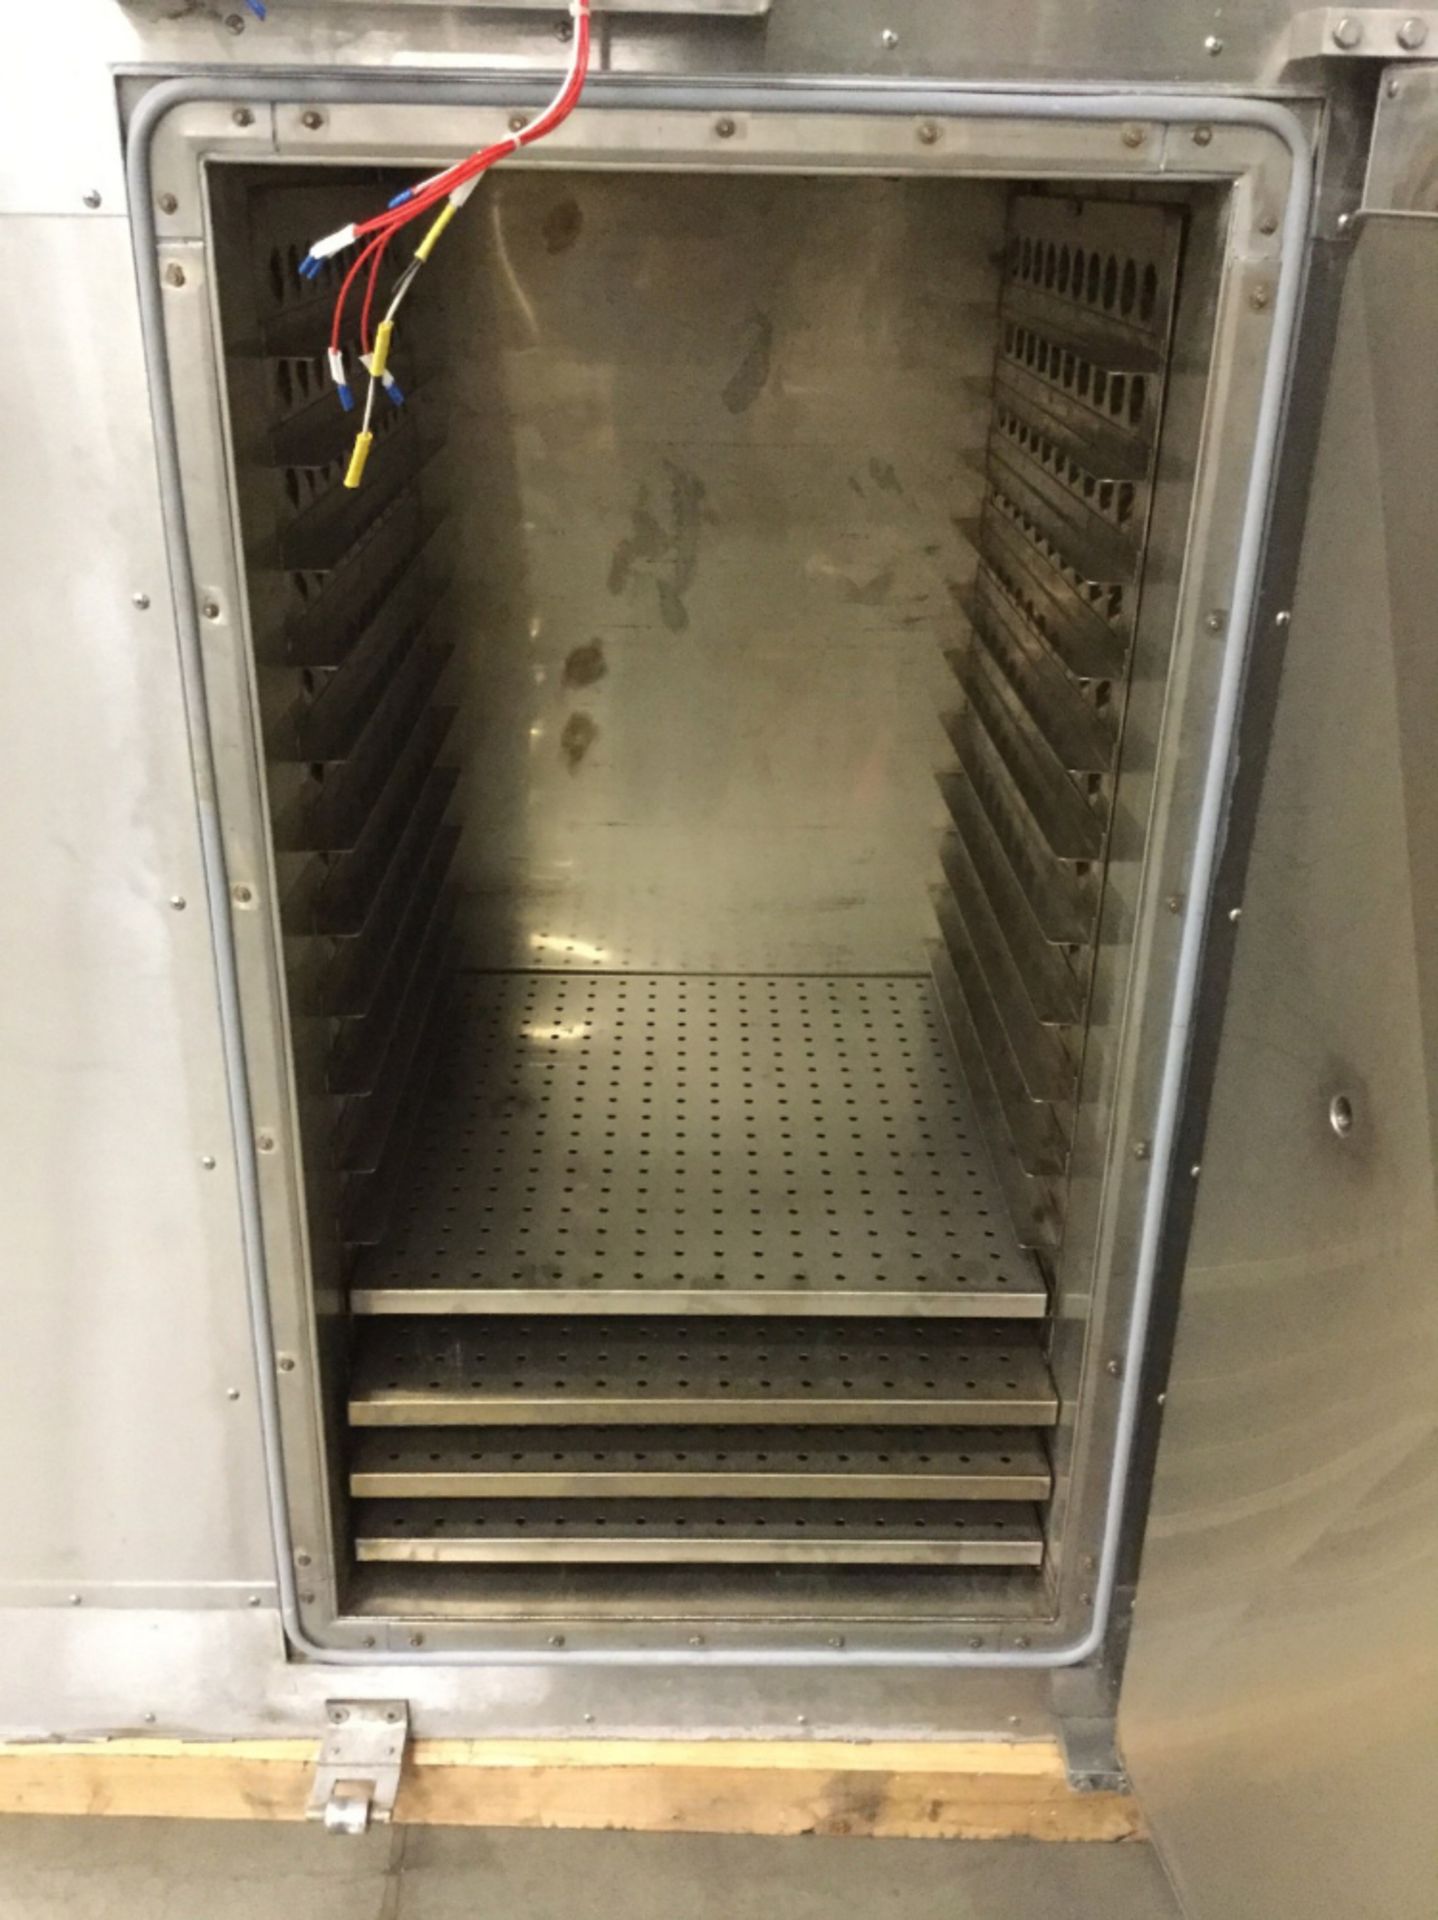 Gruenberg Model C55H2O.2SS1D Laboratory Oven - Image 3 of 3